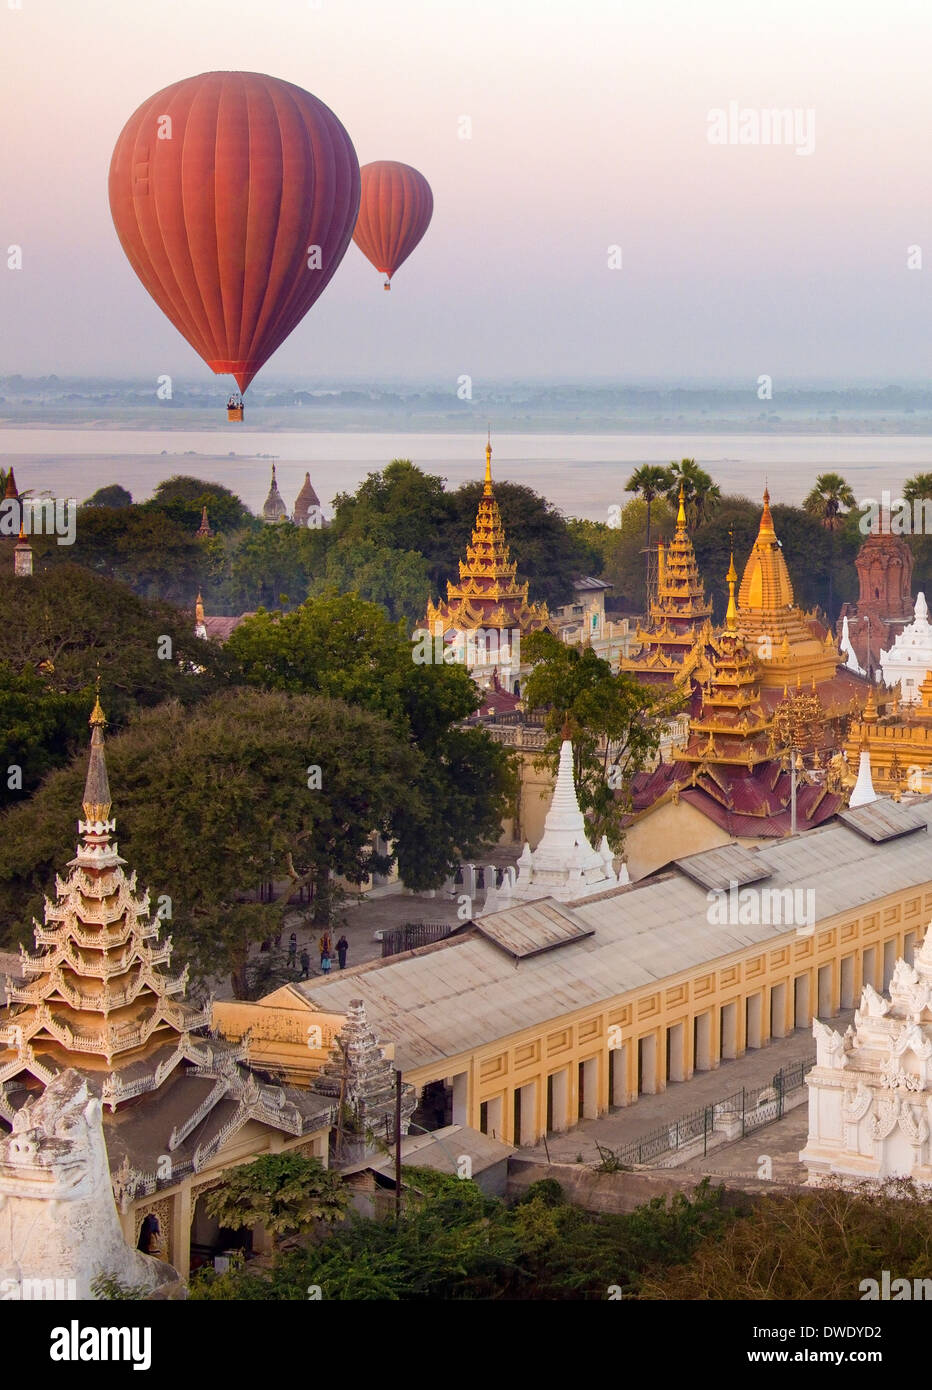 Hot Air Balloons by temples near the Shwezigon Pagoda - Bagan in Myanmar (Burma) Stock Photo